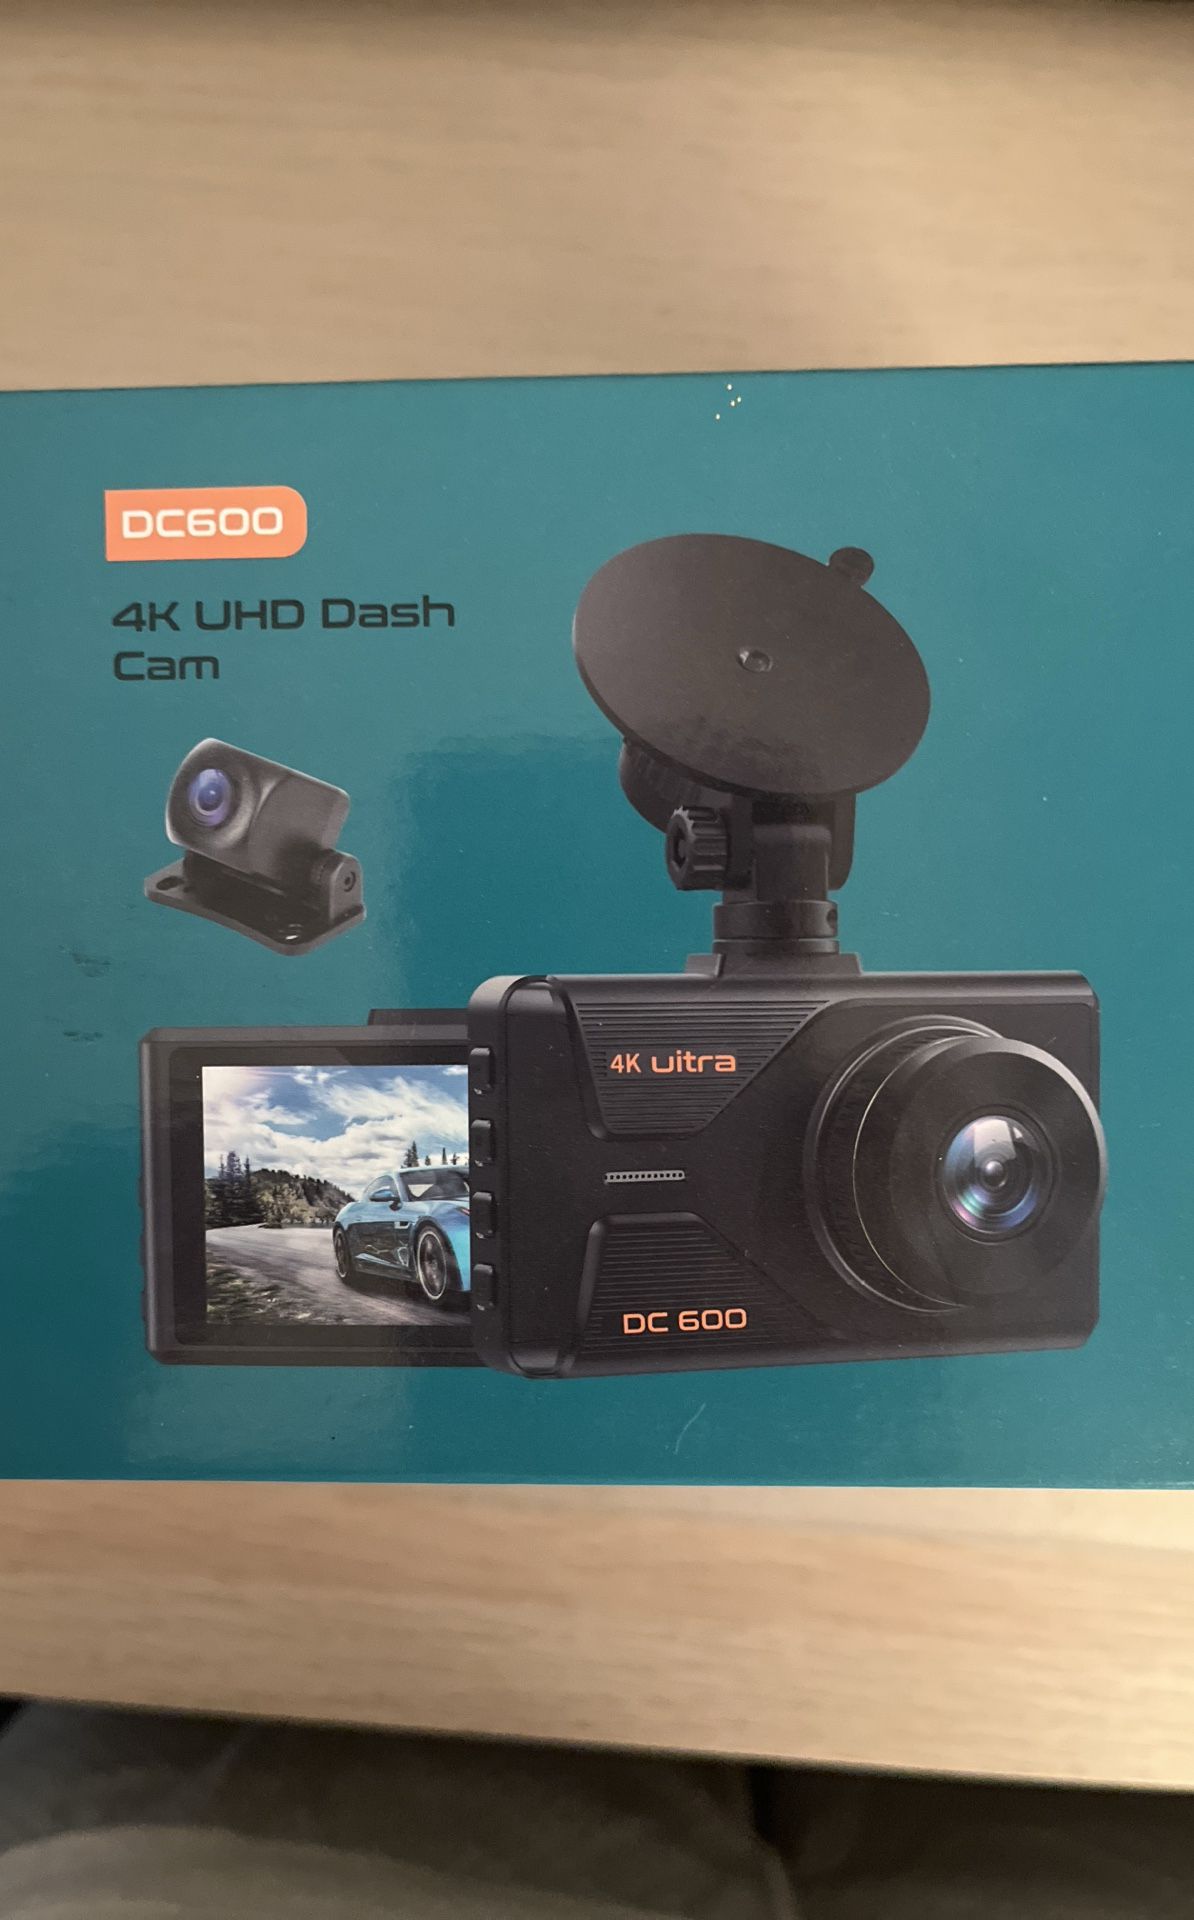 4K UHD Dash cam DC600